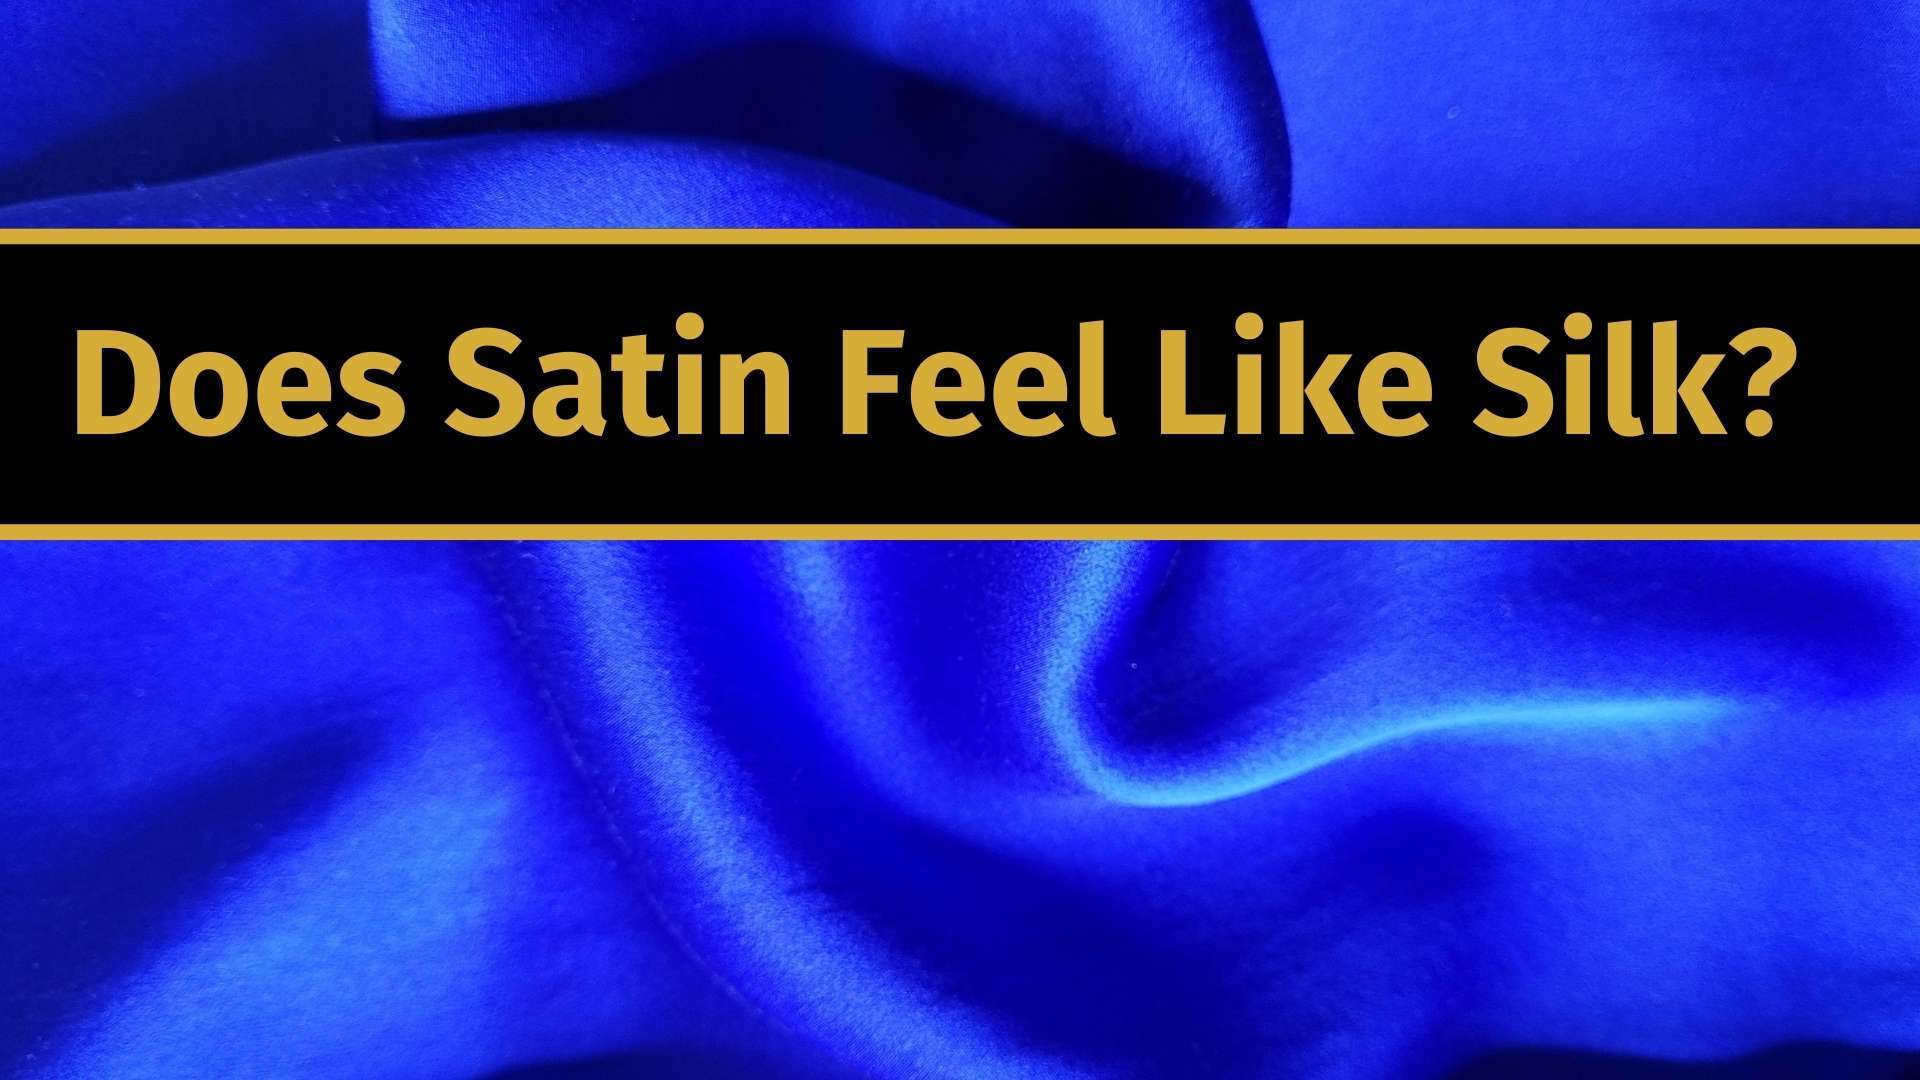 does satin feel like silk banner image